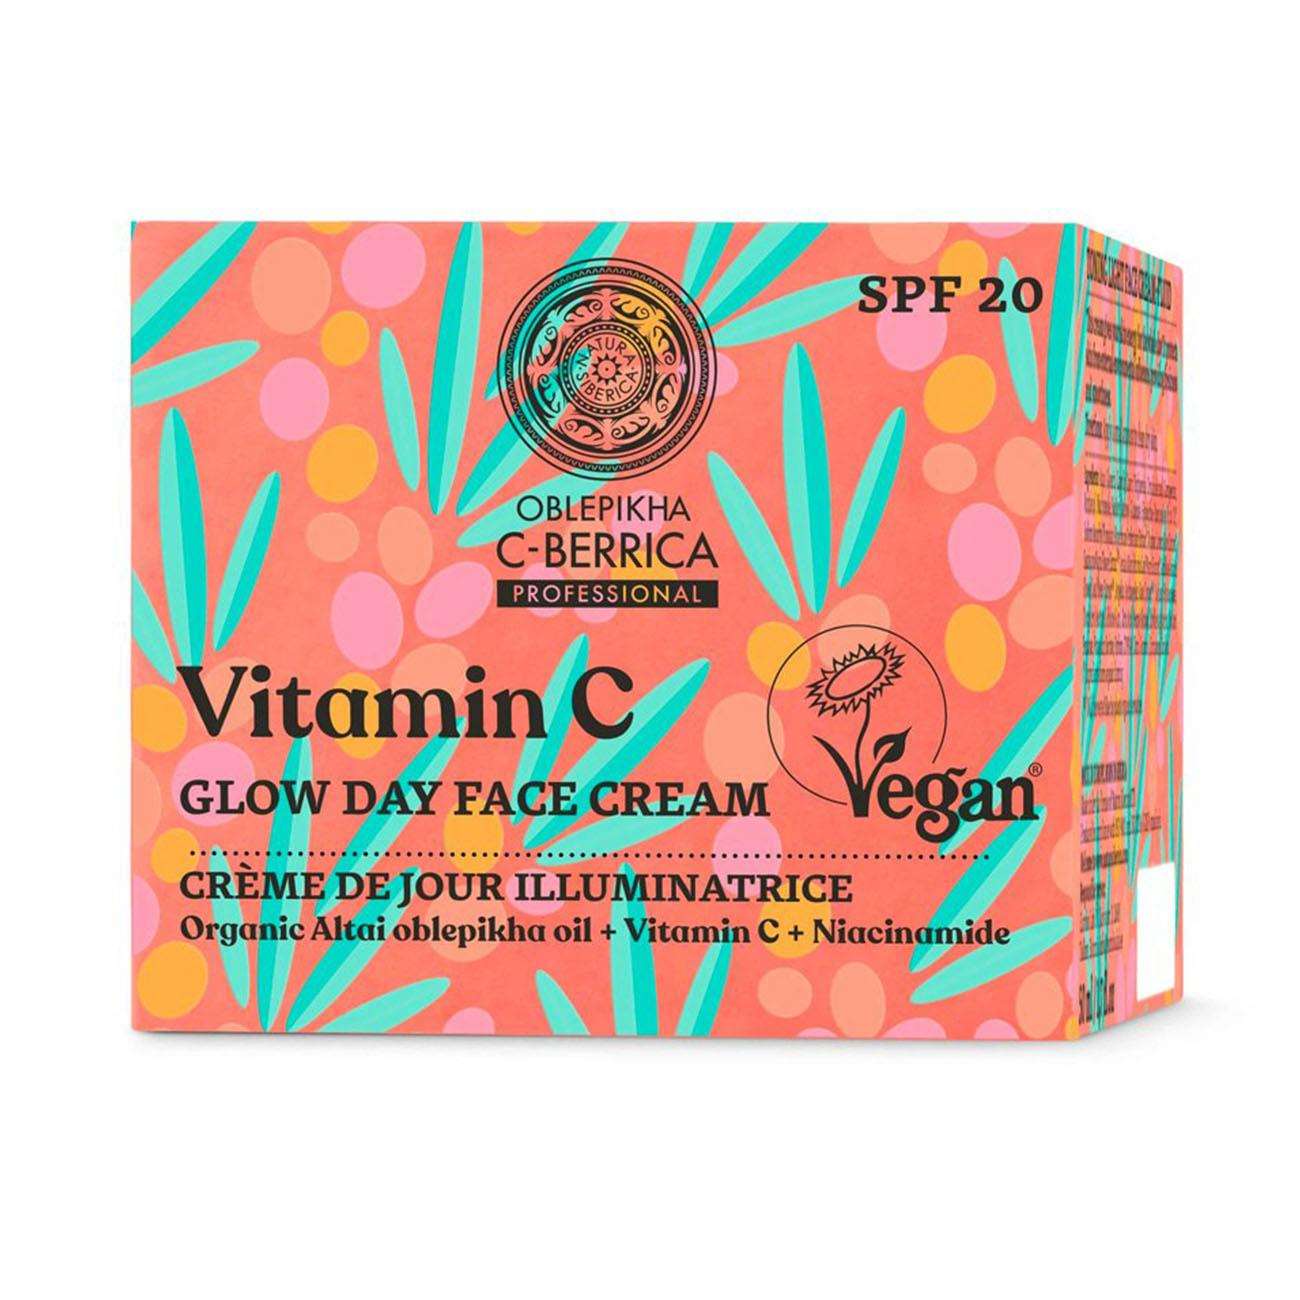 C-Berrica Glow Day Face Cream 50ml